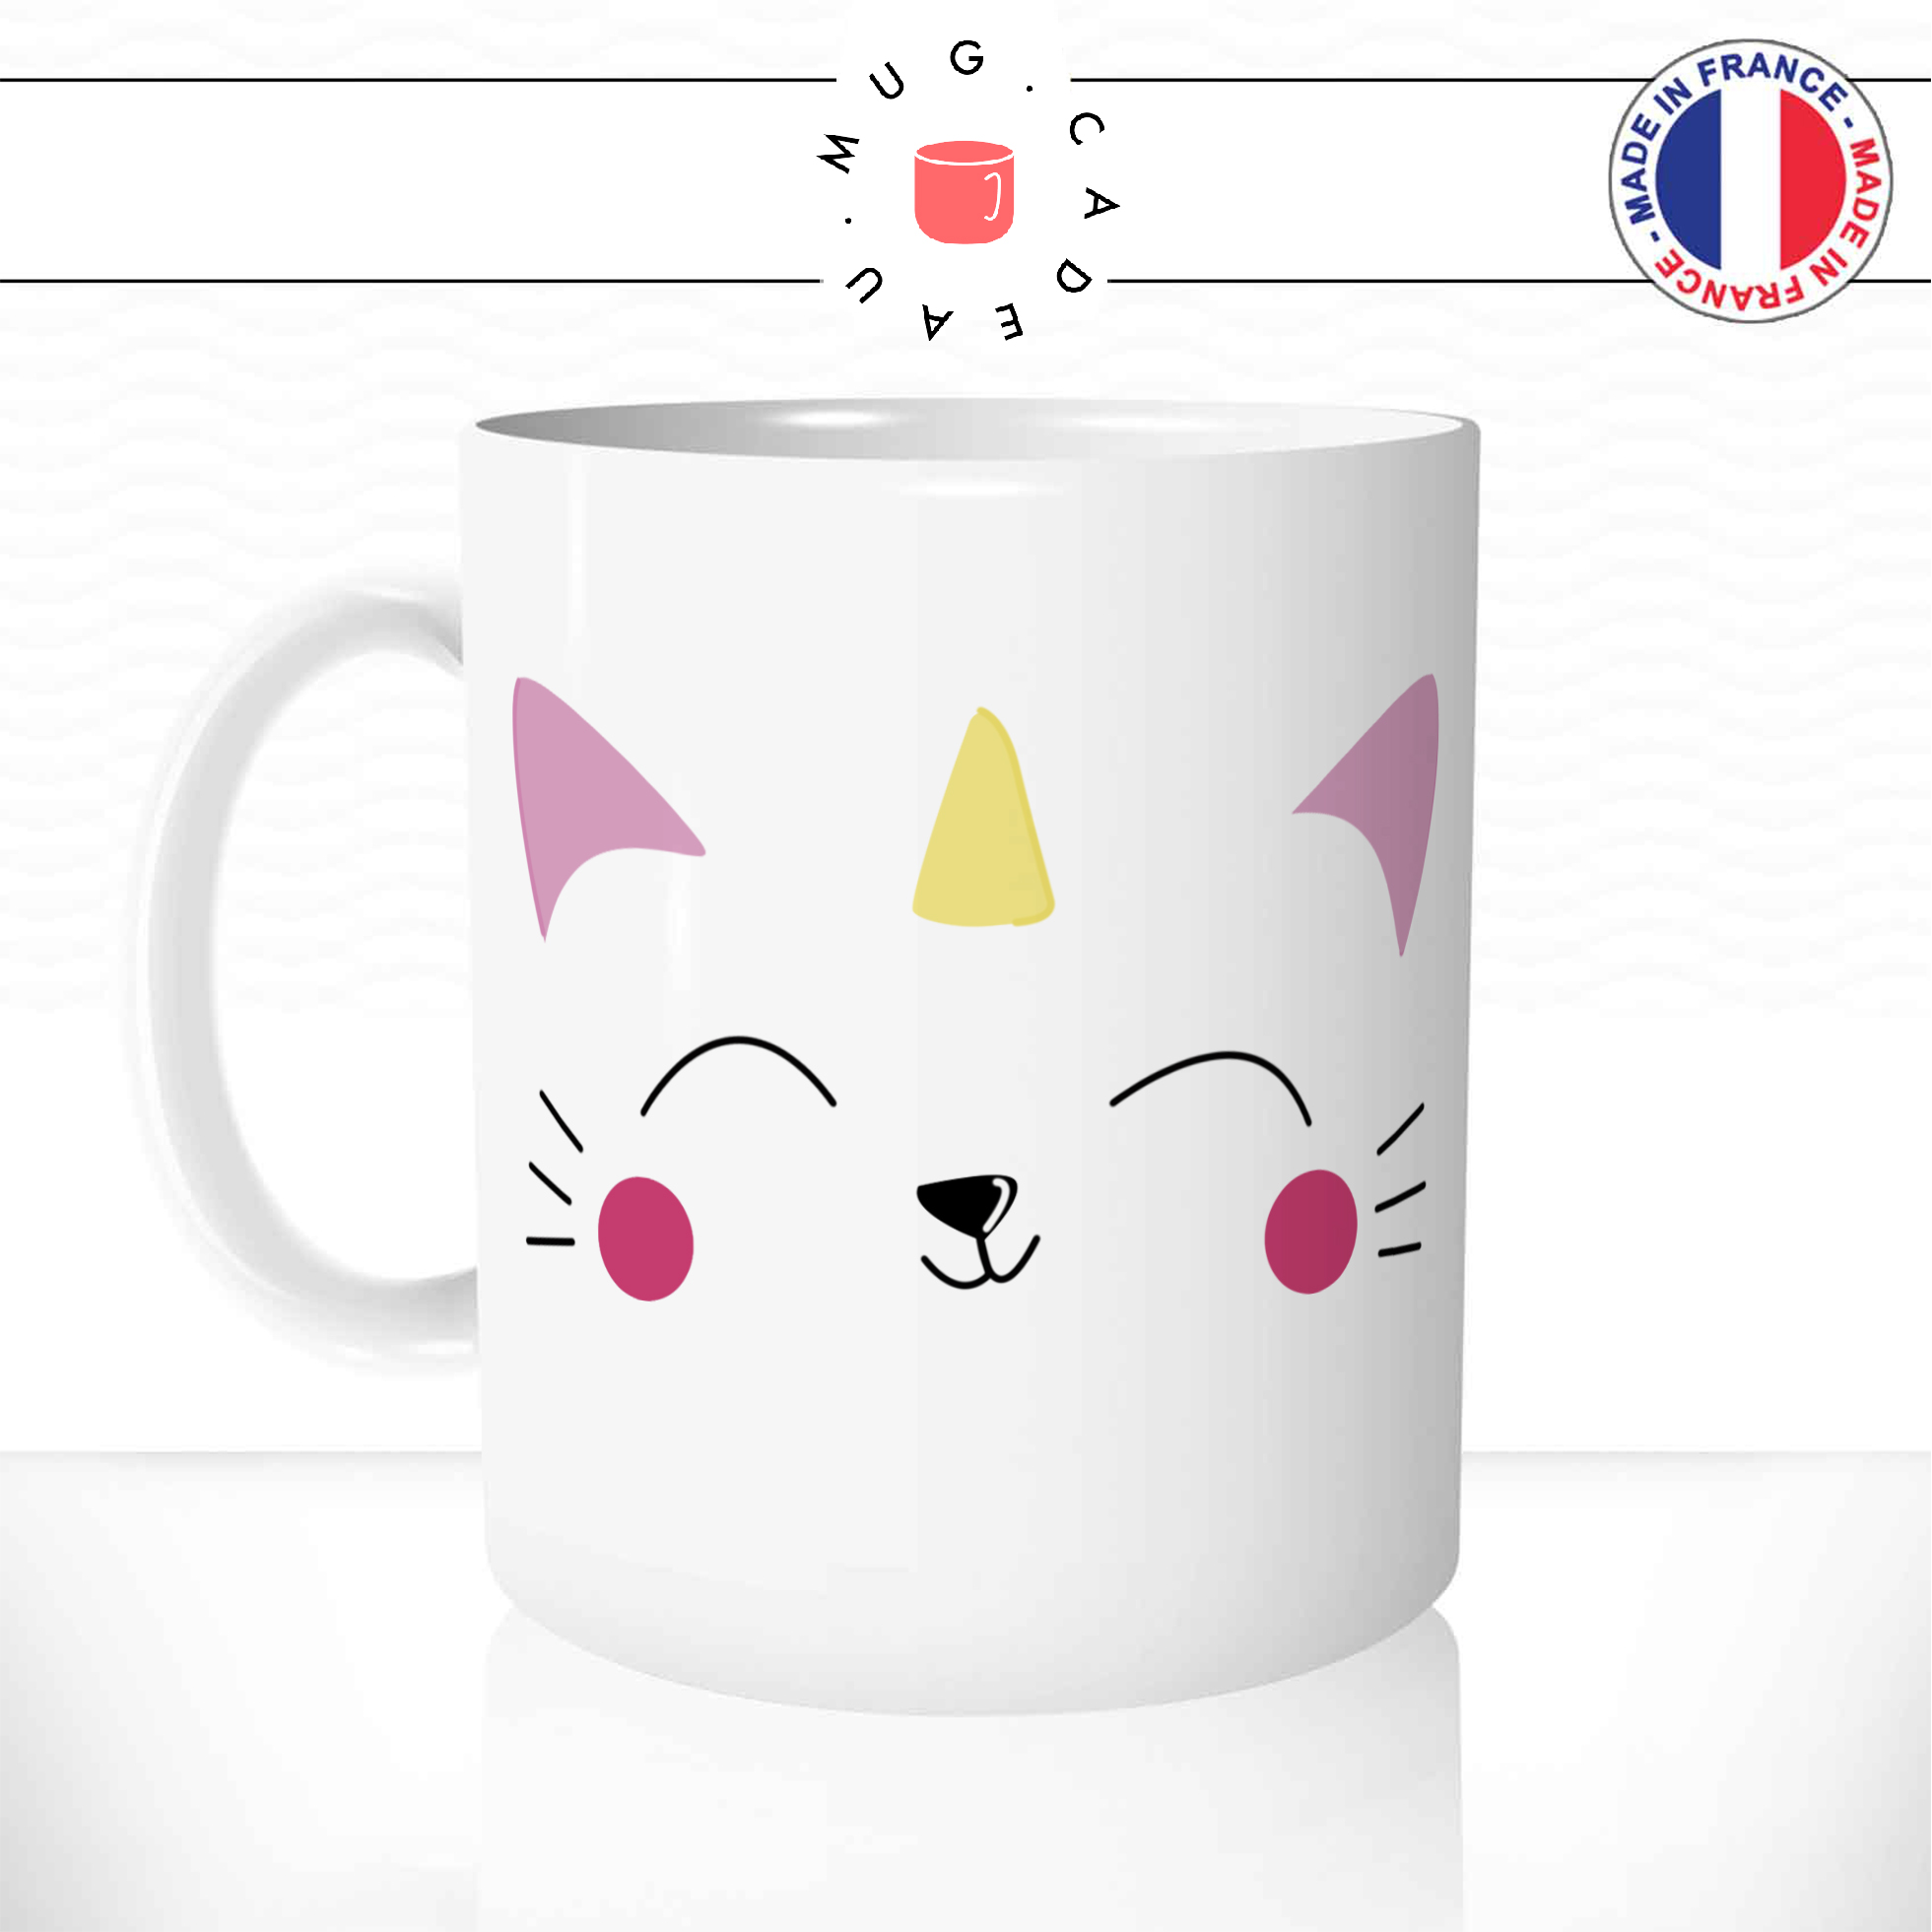 mug-tasse-ref20-chat-licorne-content-rose-mignon-dessin-cafe-the-mugs-tasses-personnalise-anse-gauche